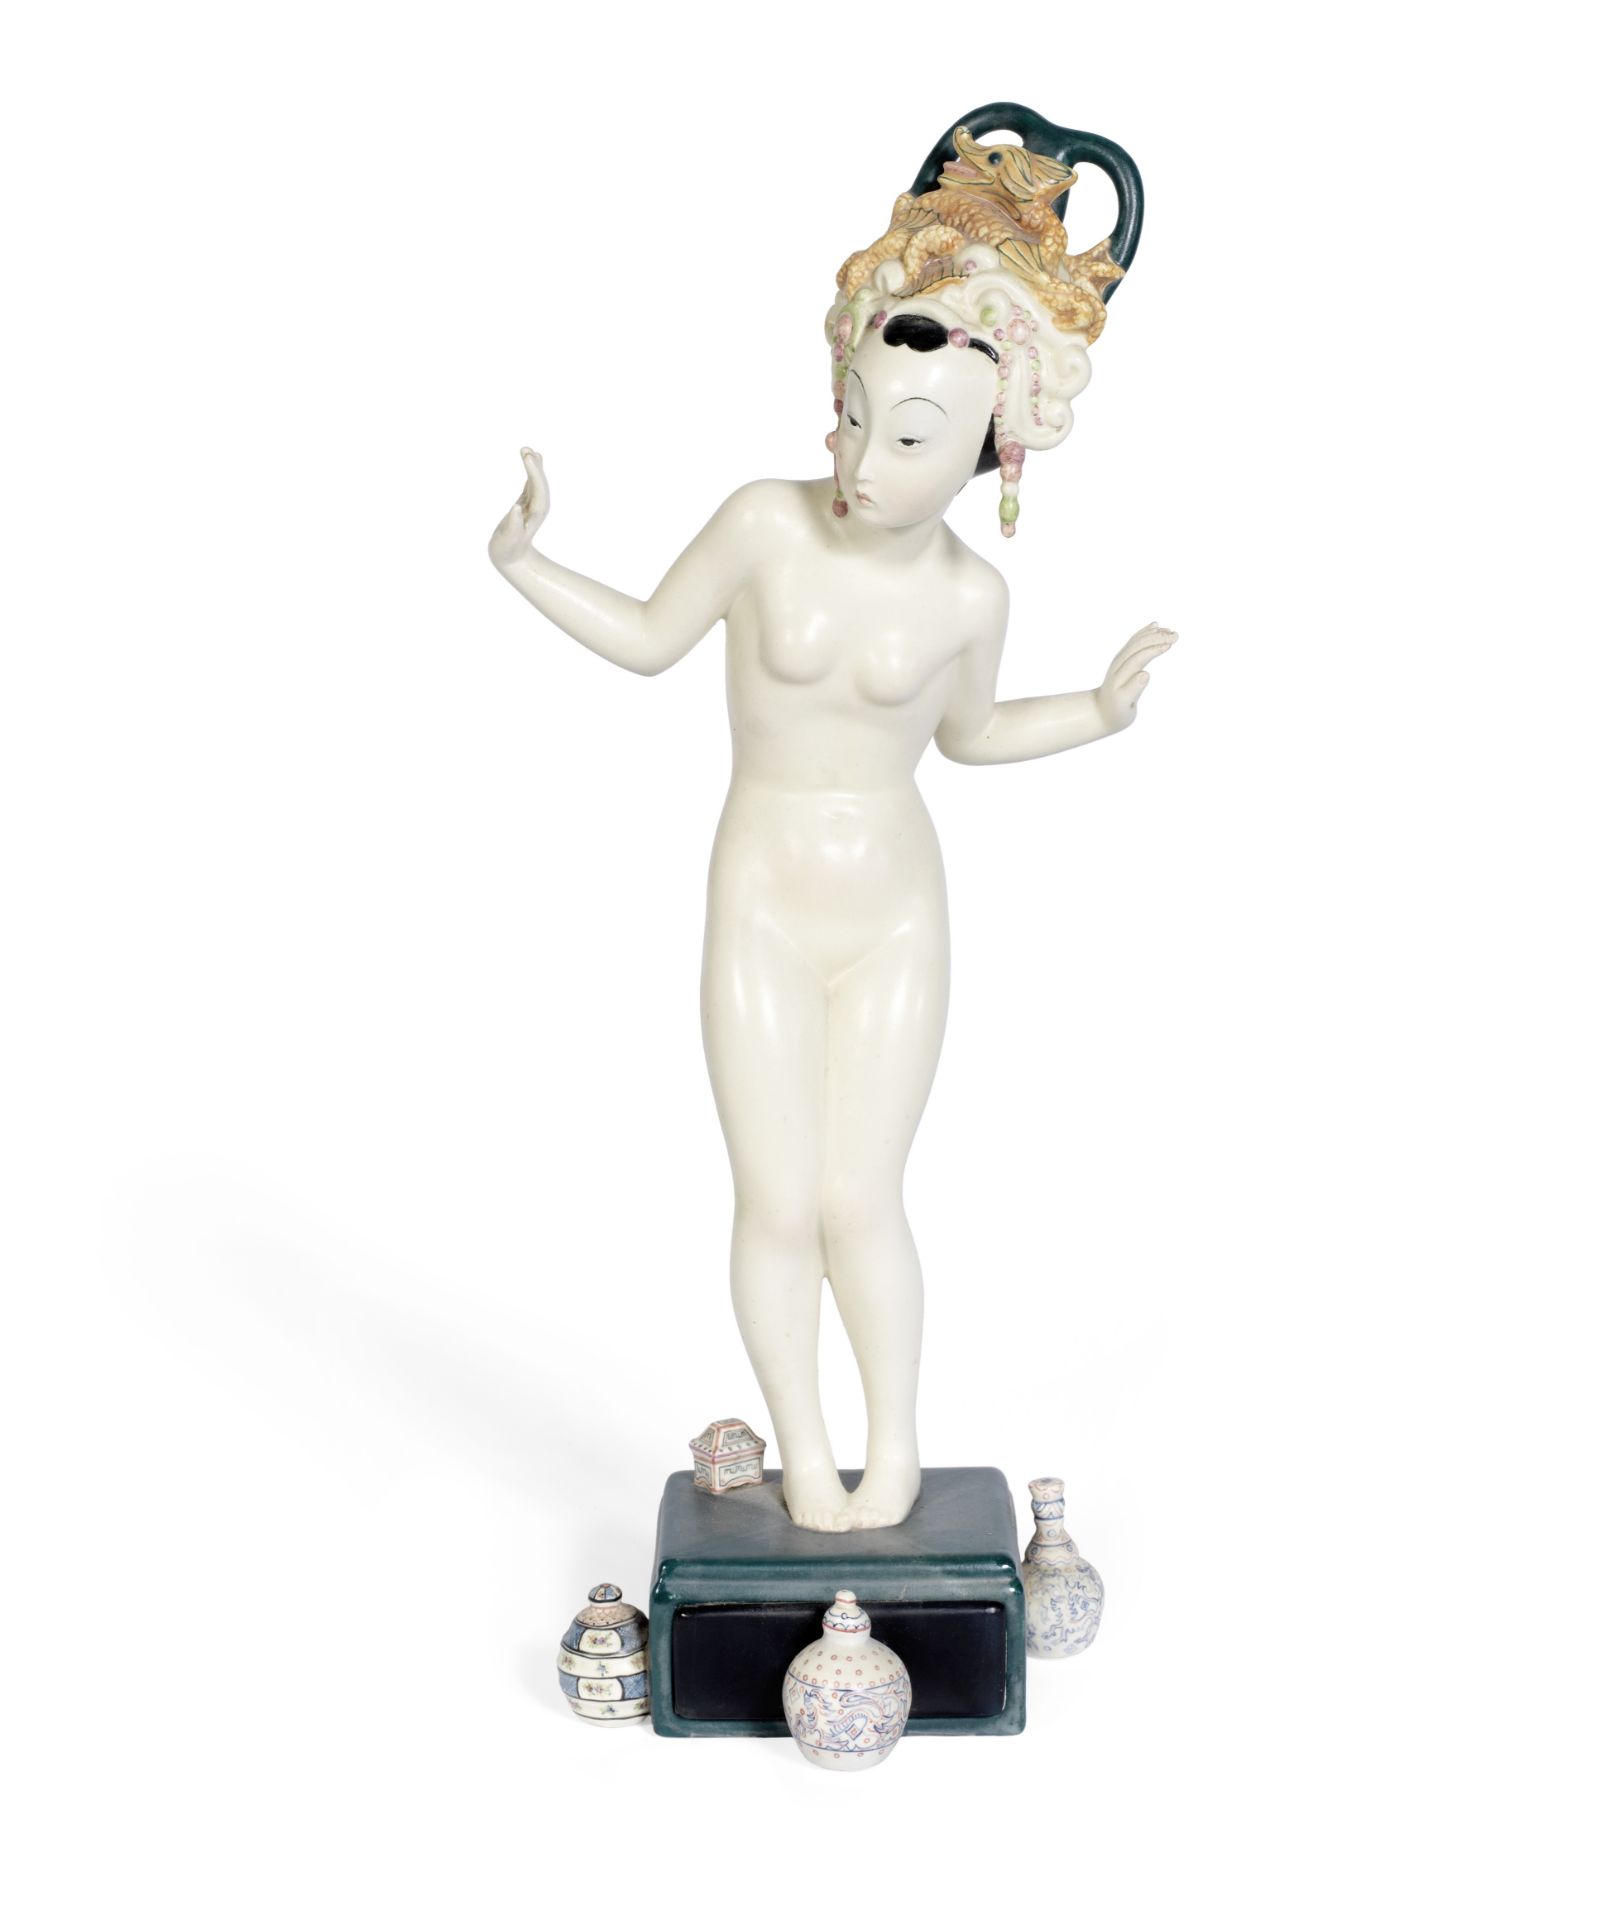 Lenci (Italian) An Earthenware Figure of a Nude Asian Female, circa 1930s